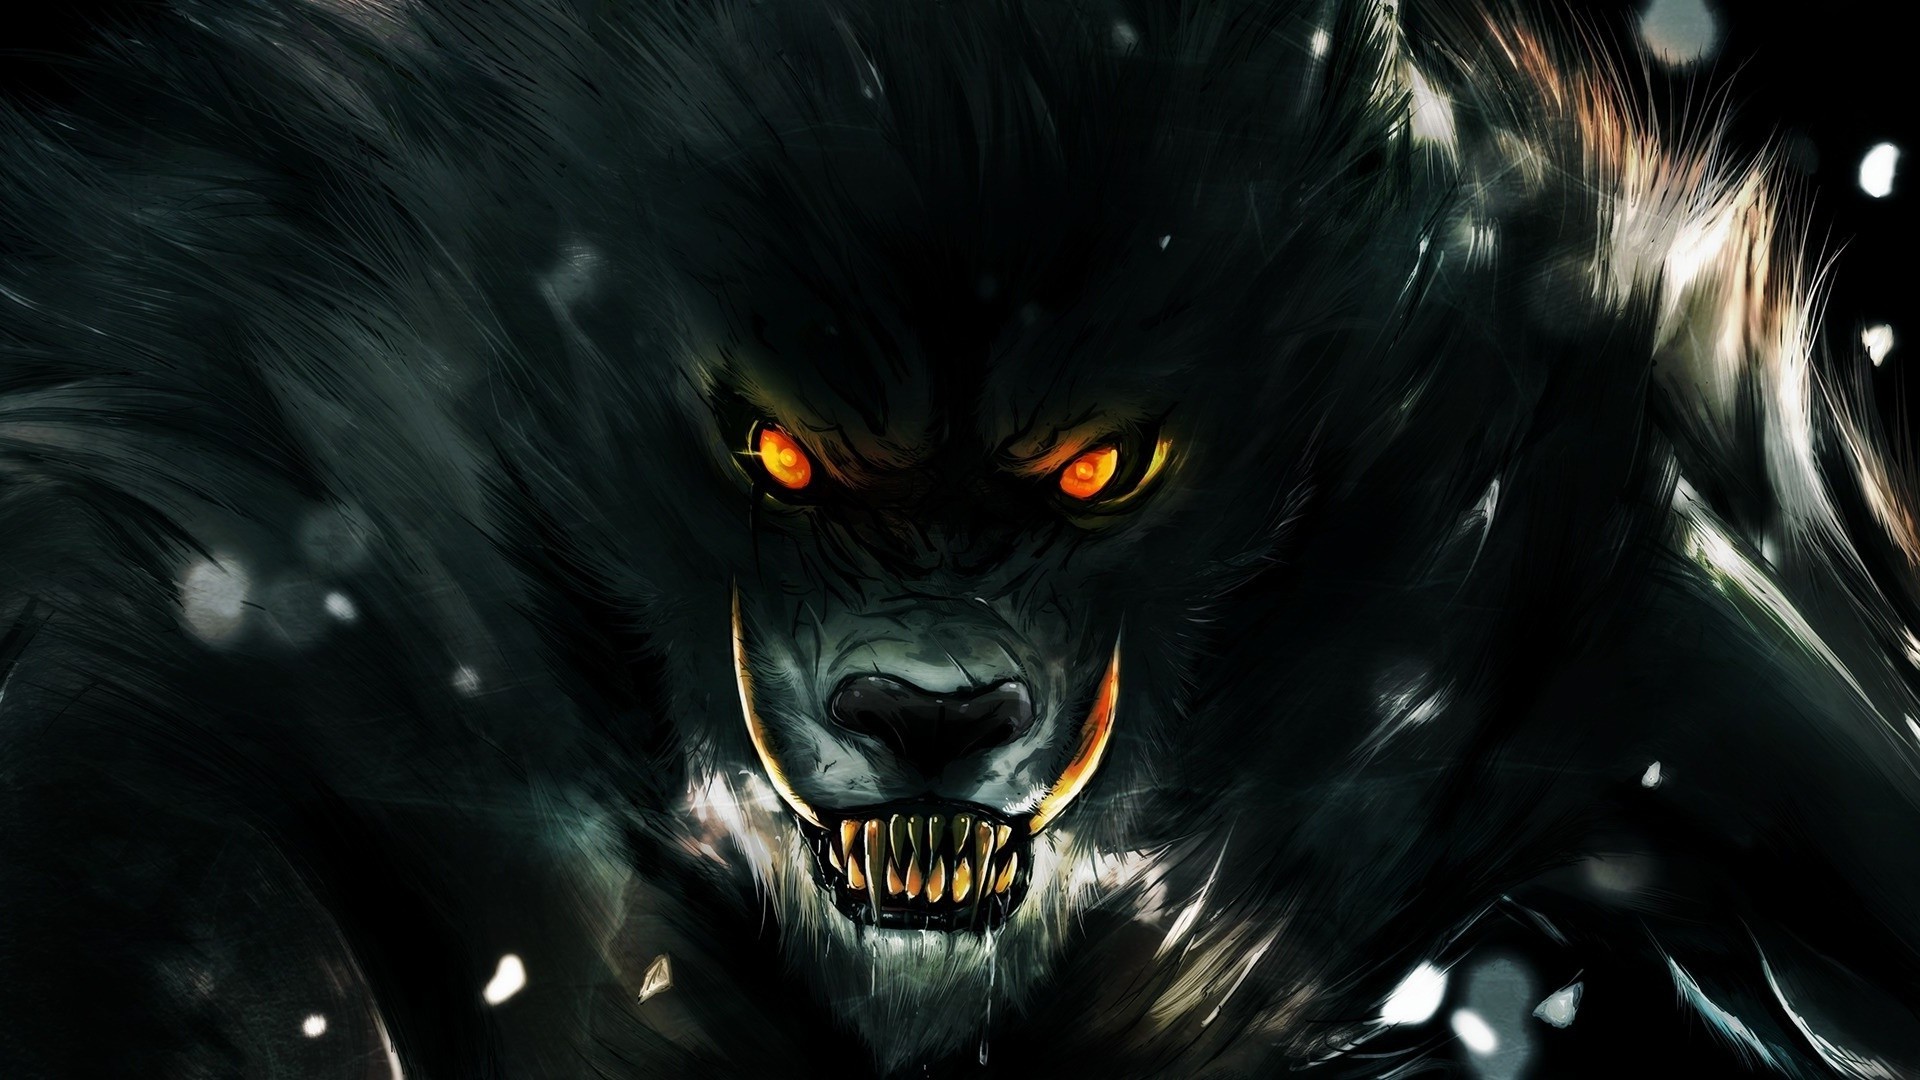 worgen wallpaper,demon,werewolf,fictional character,darkness,mythical creature